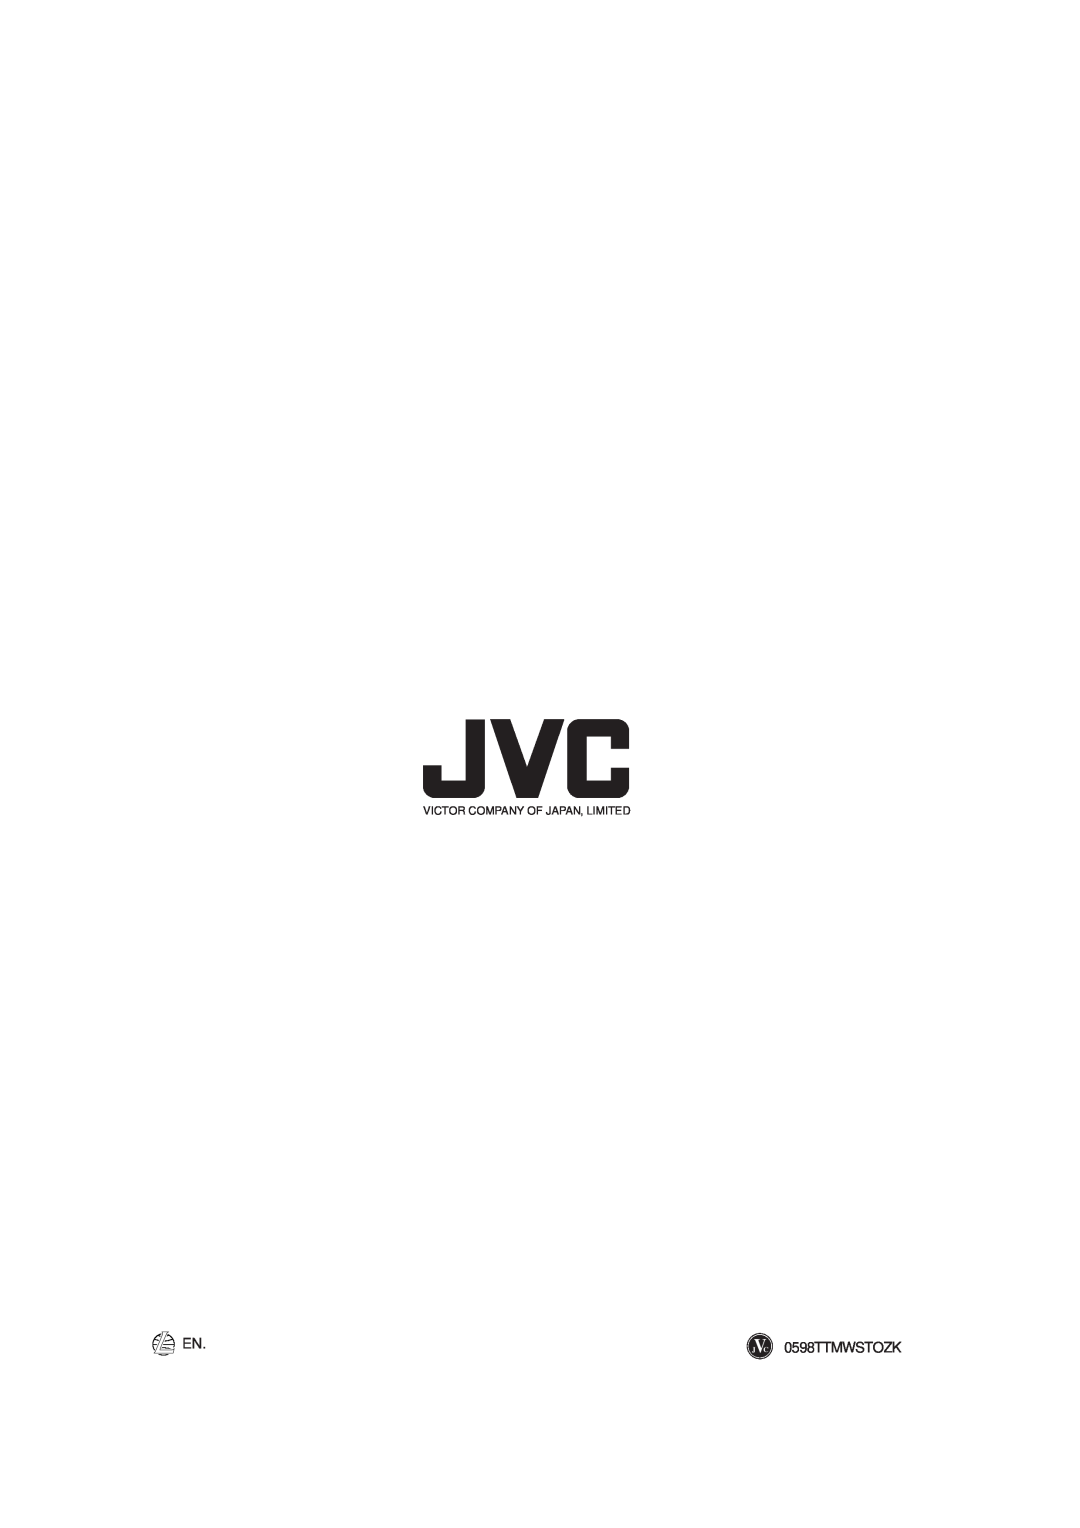 JVC TD-EX90 manual JVC 0598TTMWSTOZK, Victor Company Of Japan, Limited 